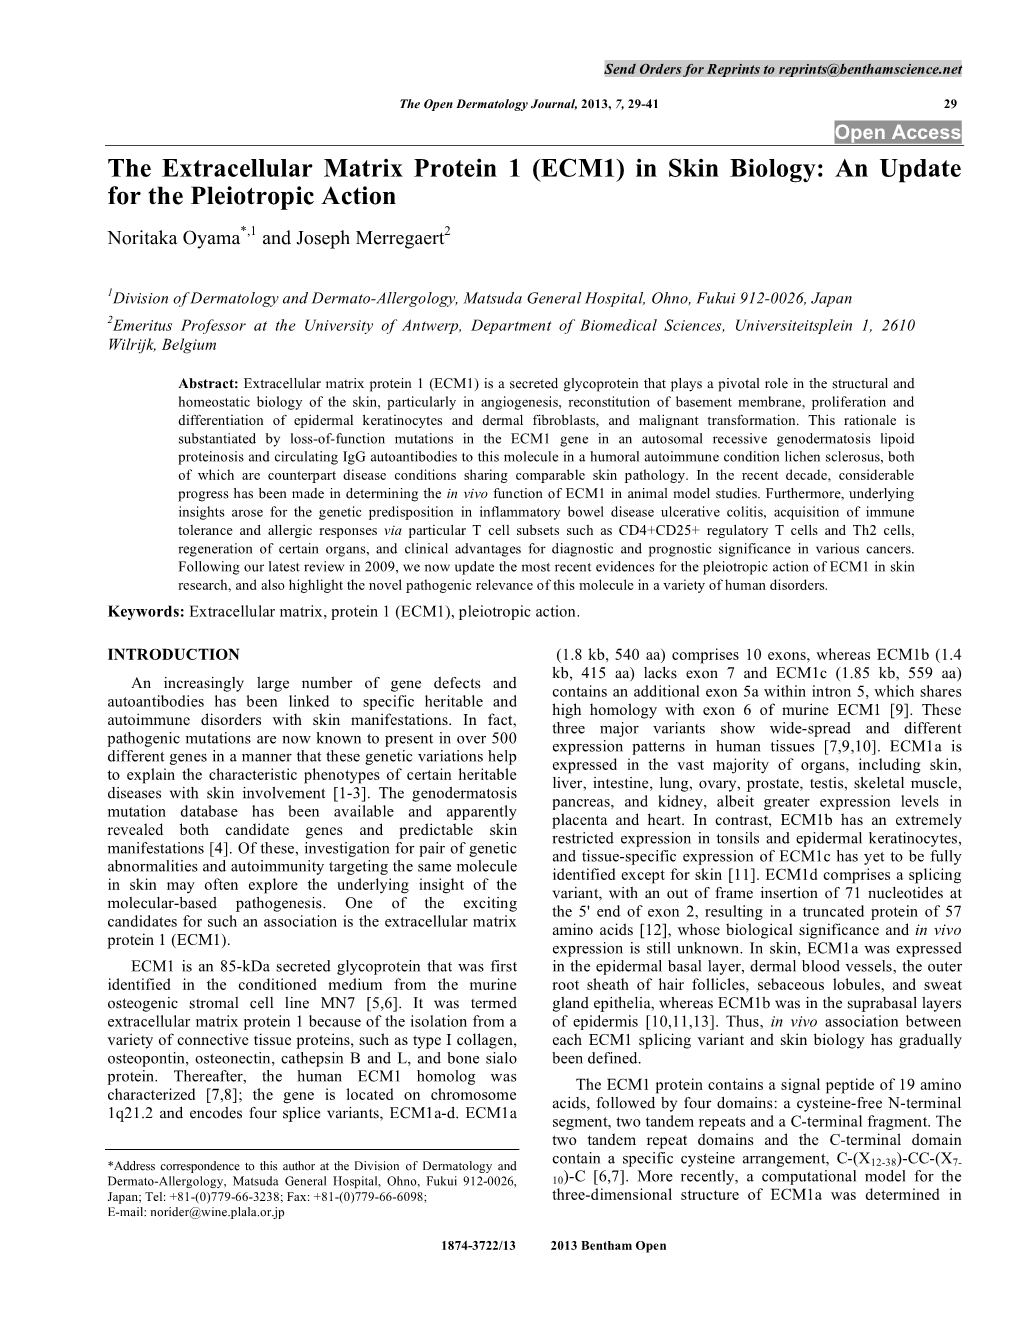 The Extracellular Matrix Protein 1 (ECM1) in Skin Biology: an Update for the Pleiotropic Action Noritaka Oyama*,1 and Joseph Merregaert2